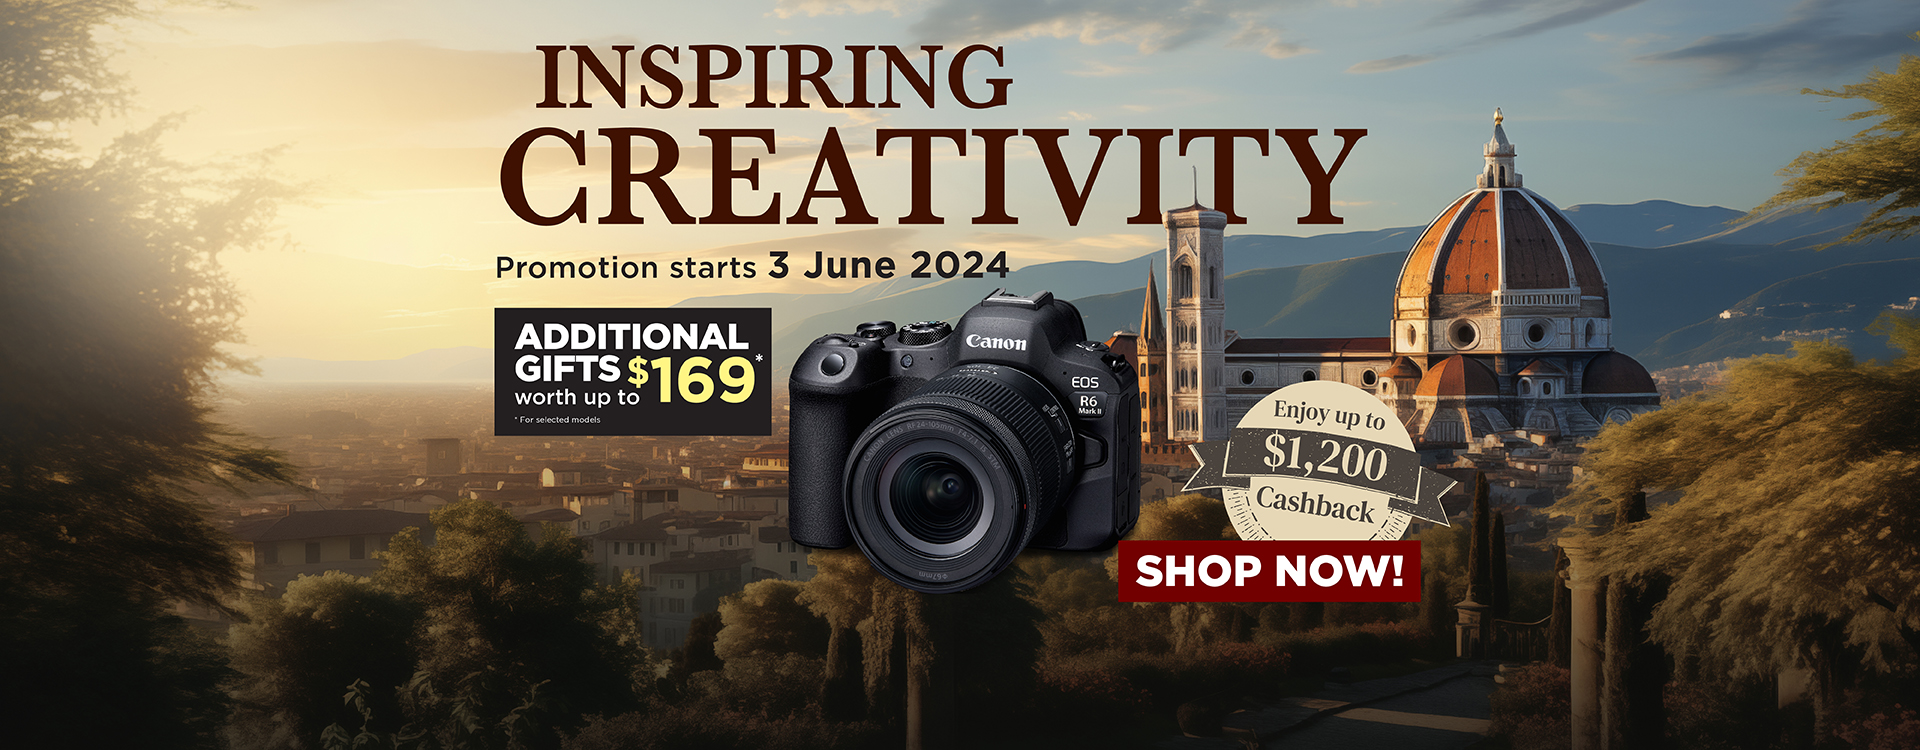 Canon June 2024 Promo - INSPIRING CREATIVITY